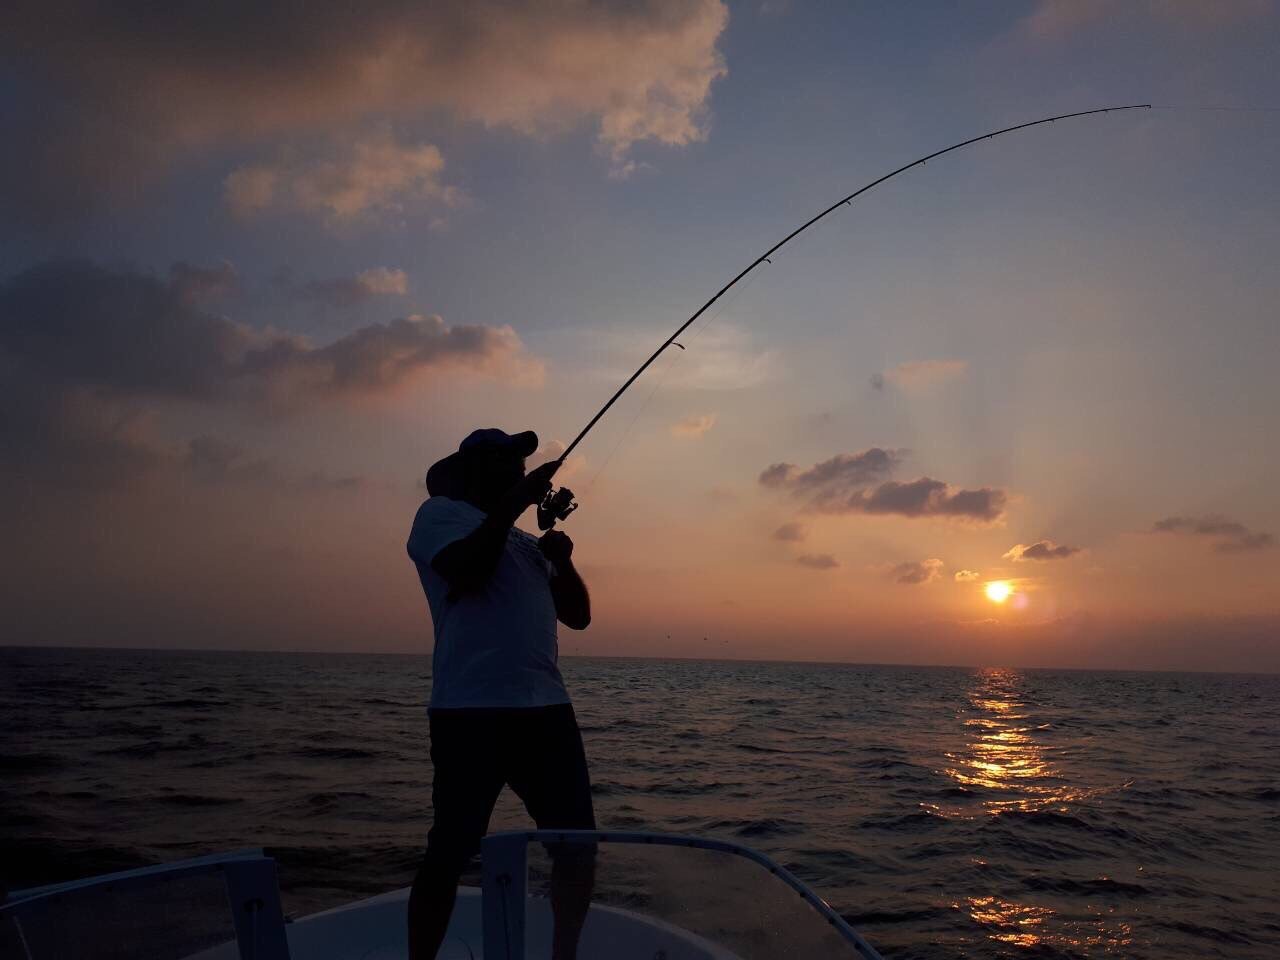 Вечерняя рыбалка